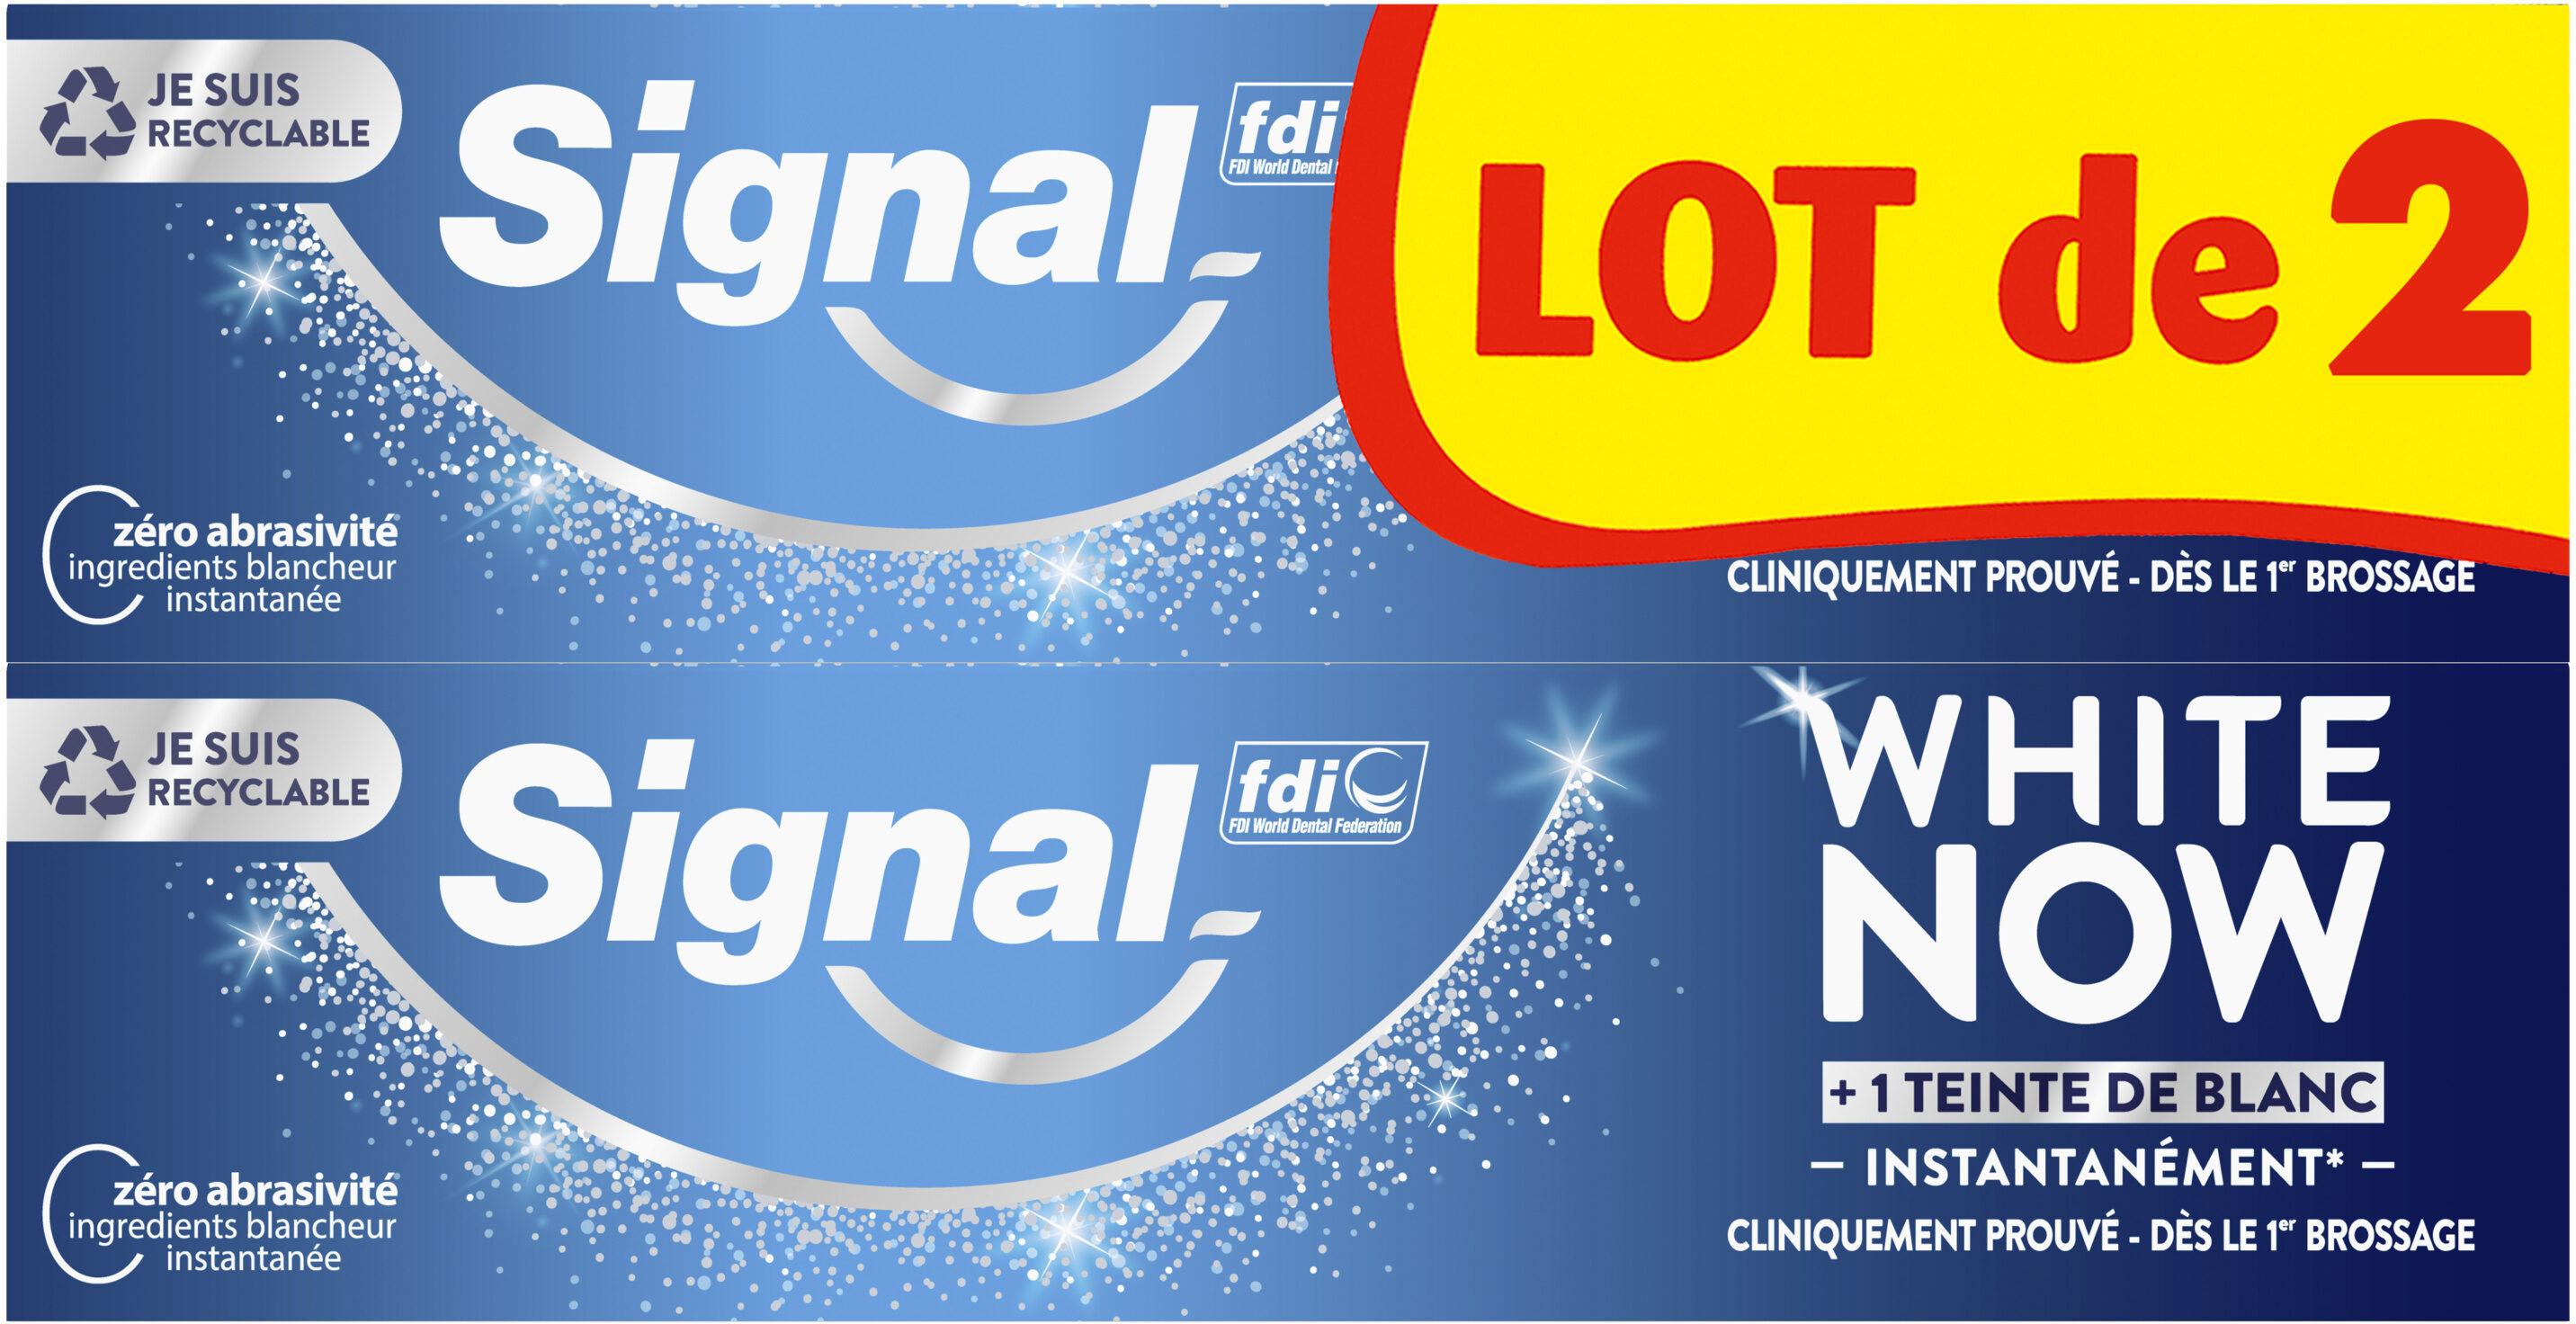 Signal White Now Dentifrice Original 2x75ml - Produto - fr